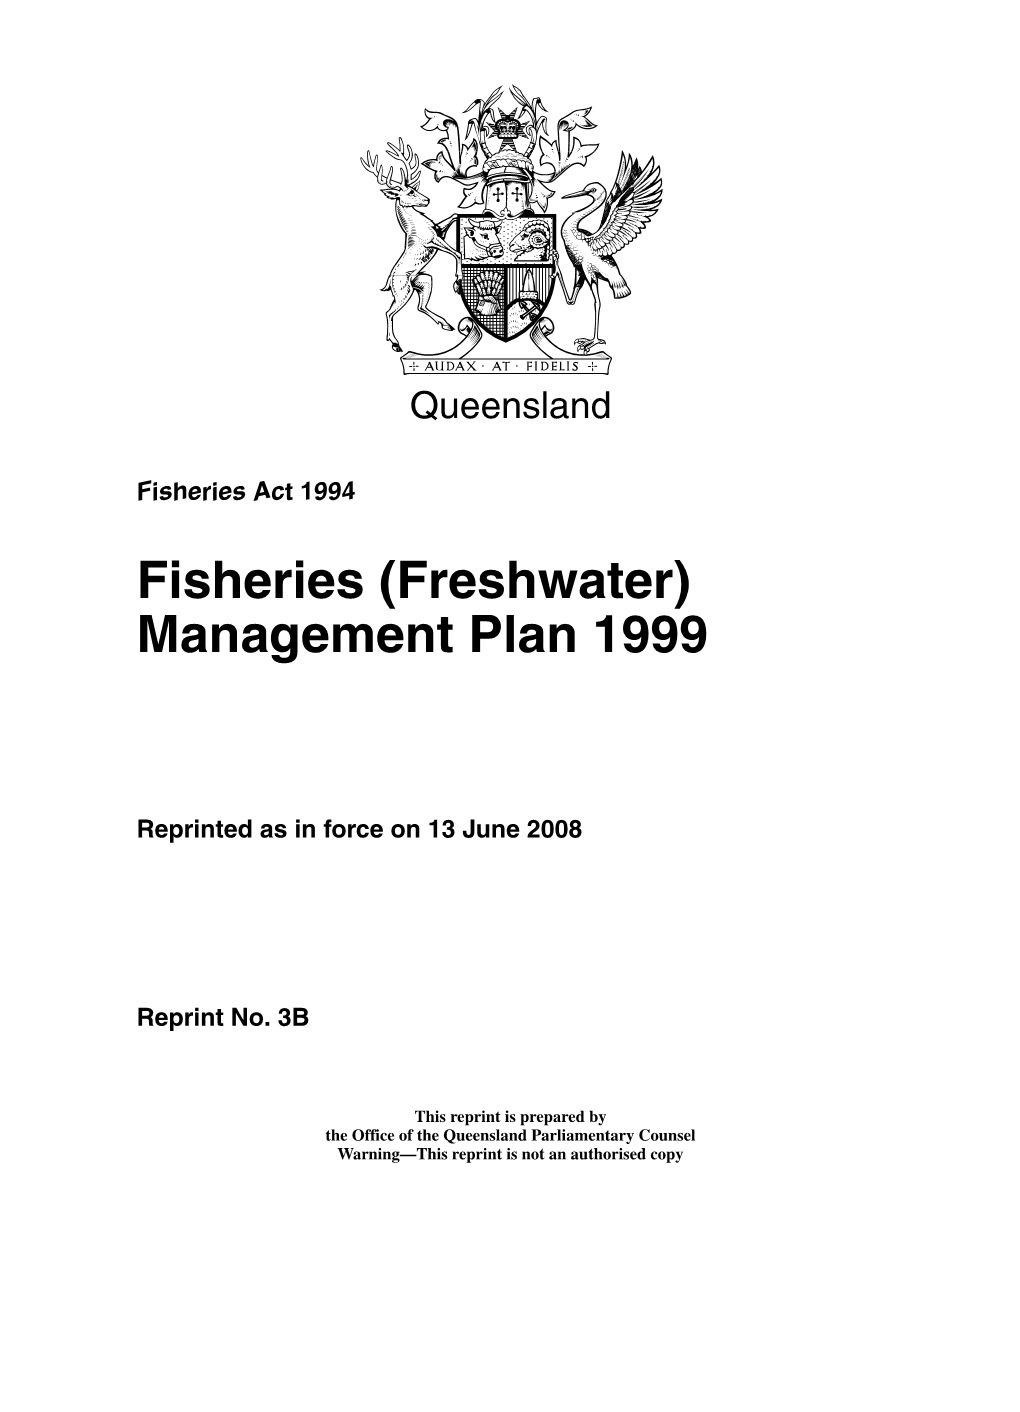 Fisheries (Freshwater) Management Plan 1999